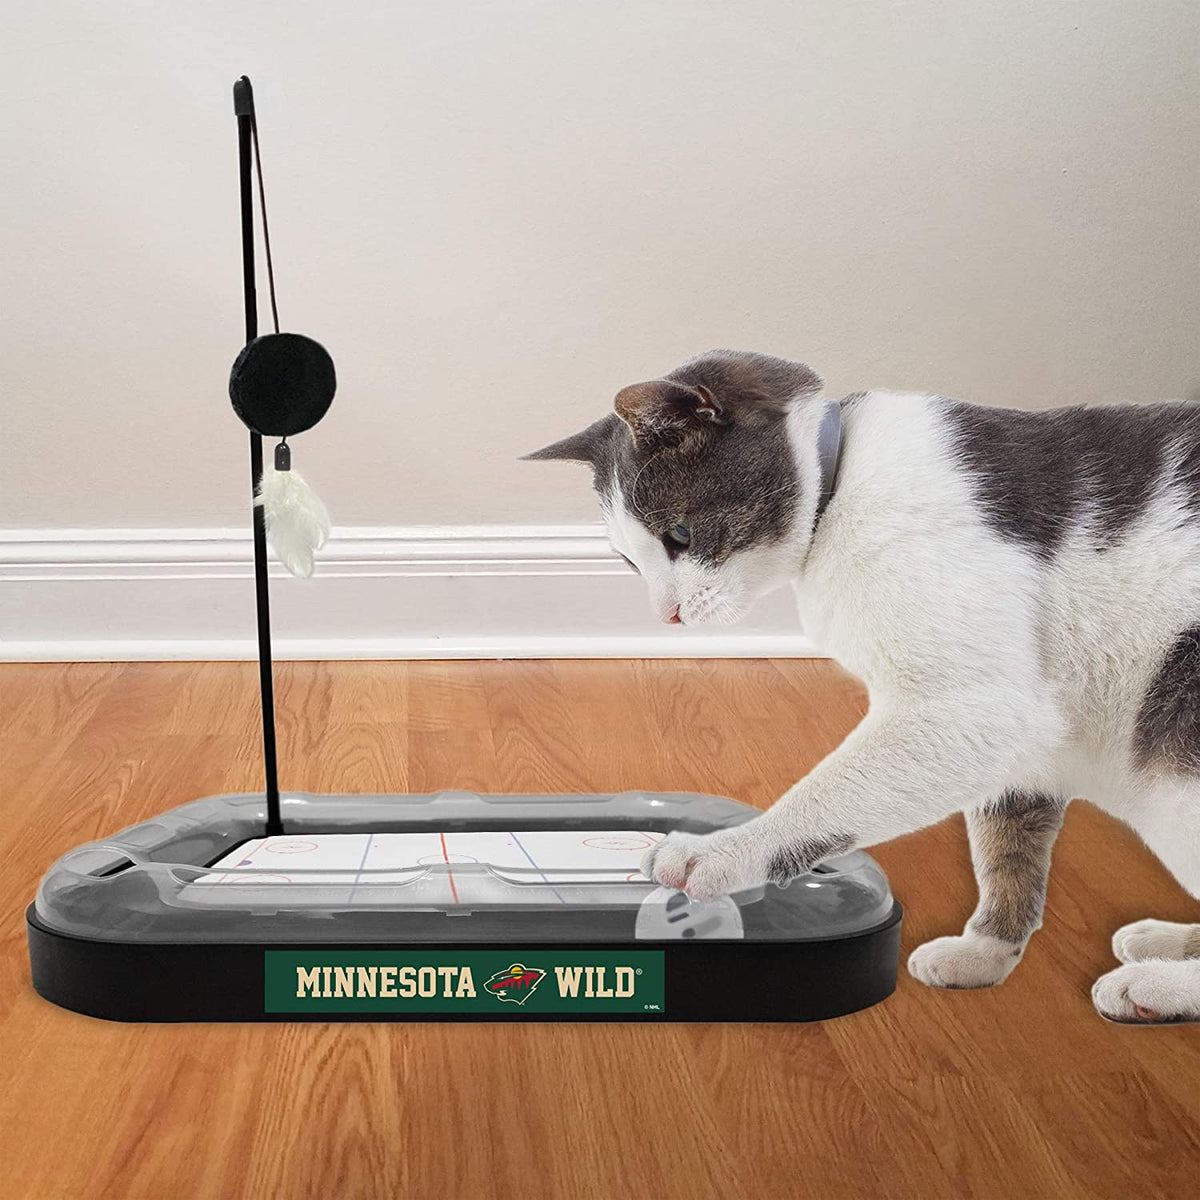 Minnesota Wild Hockey Rink Cat Scratcher Toy